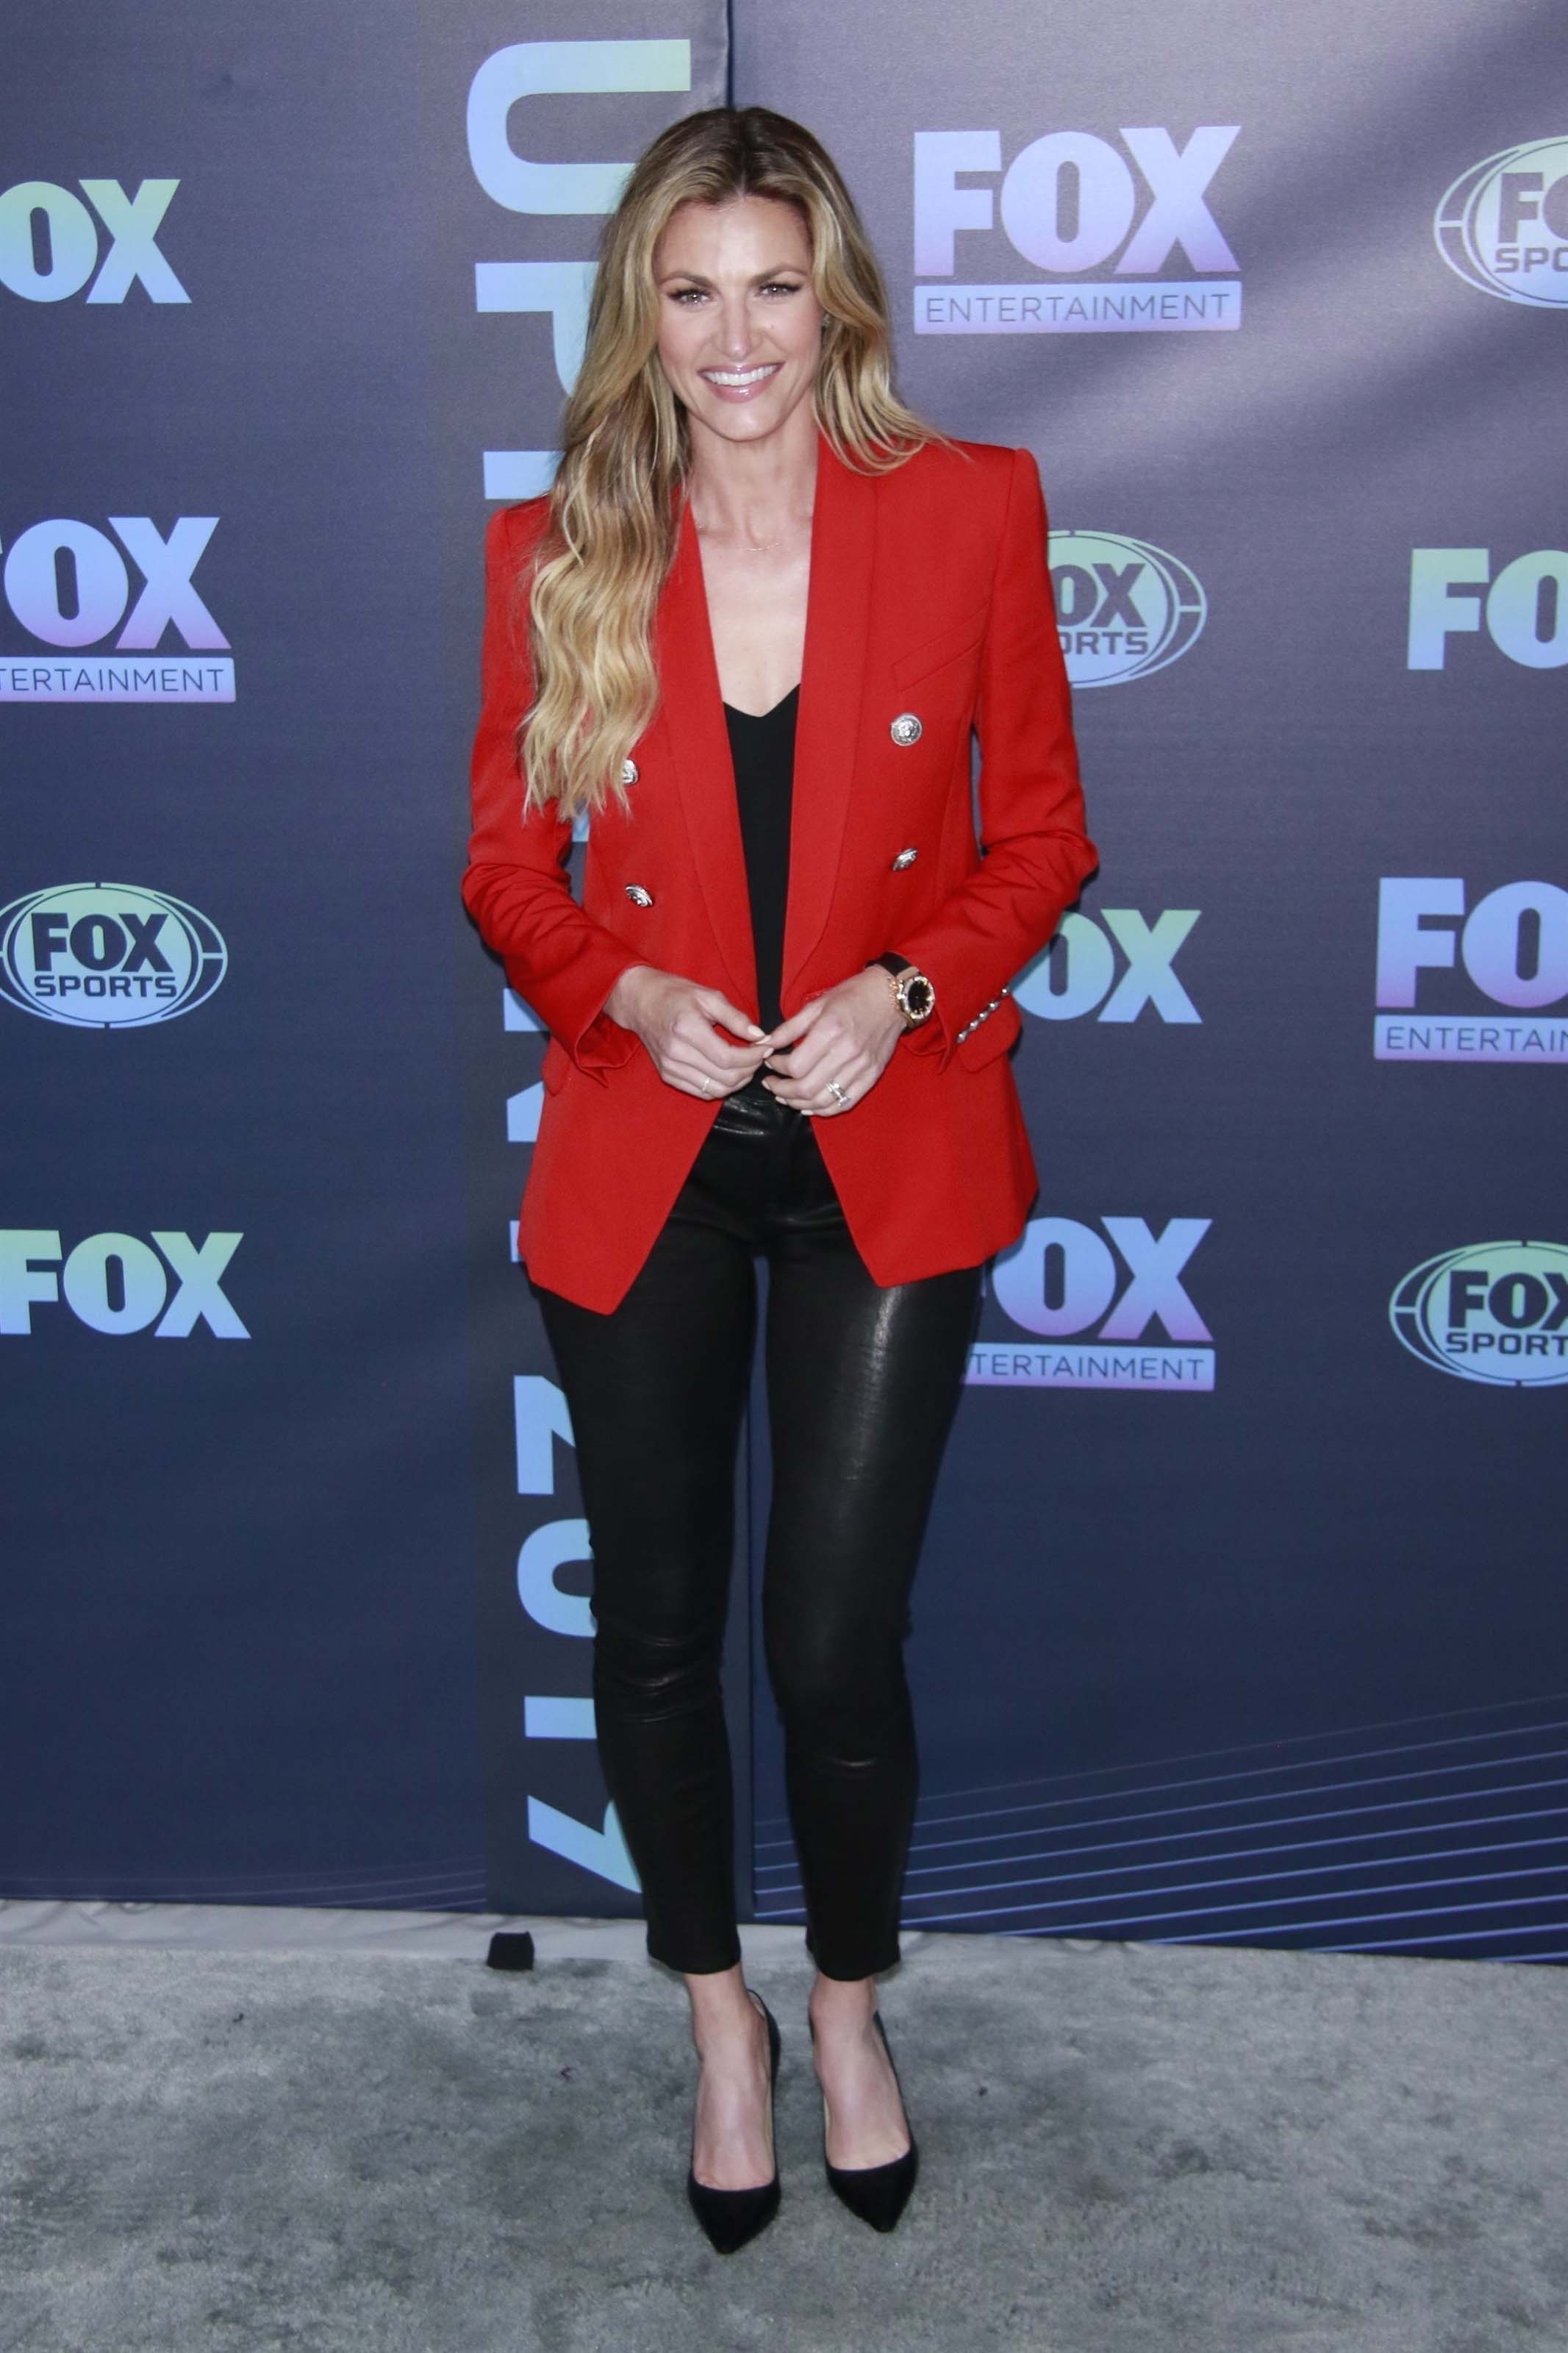 Erin Andrews attends Fox Upfront Presentation